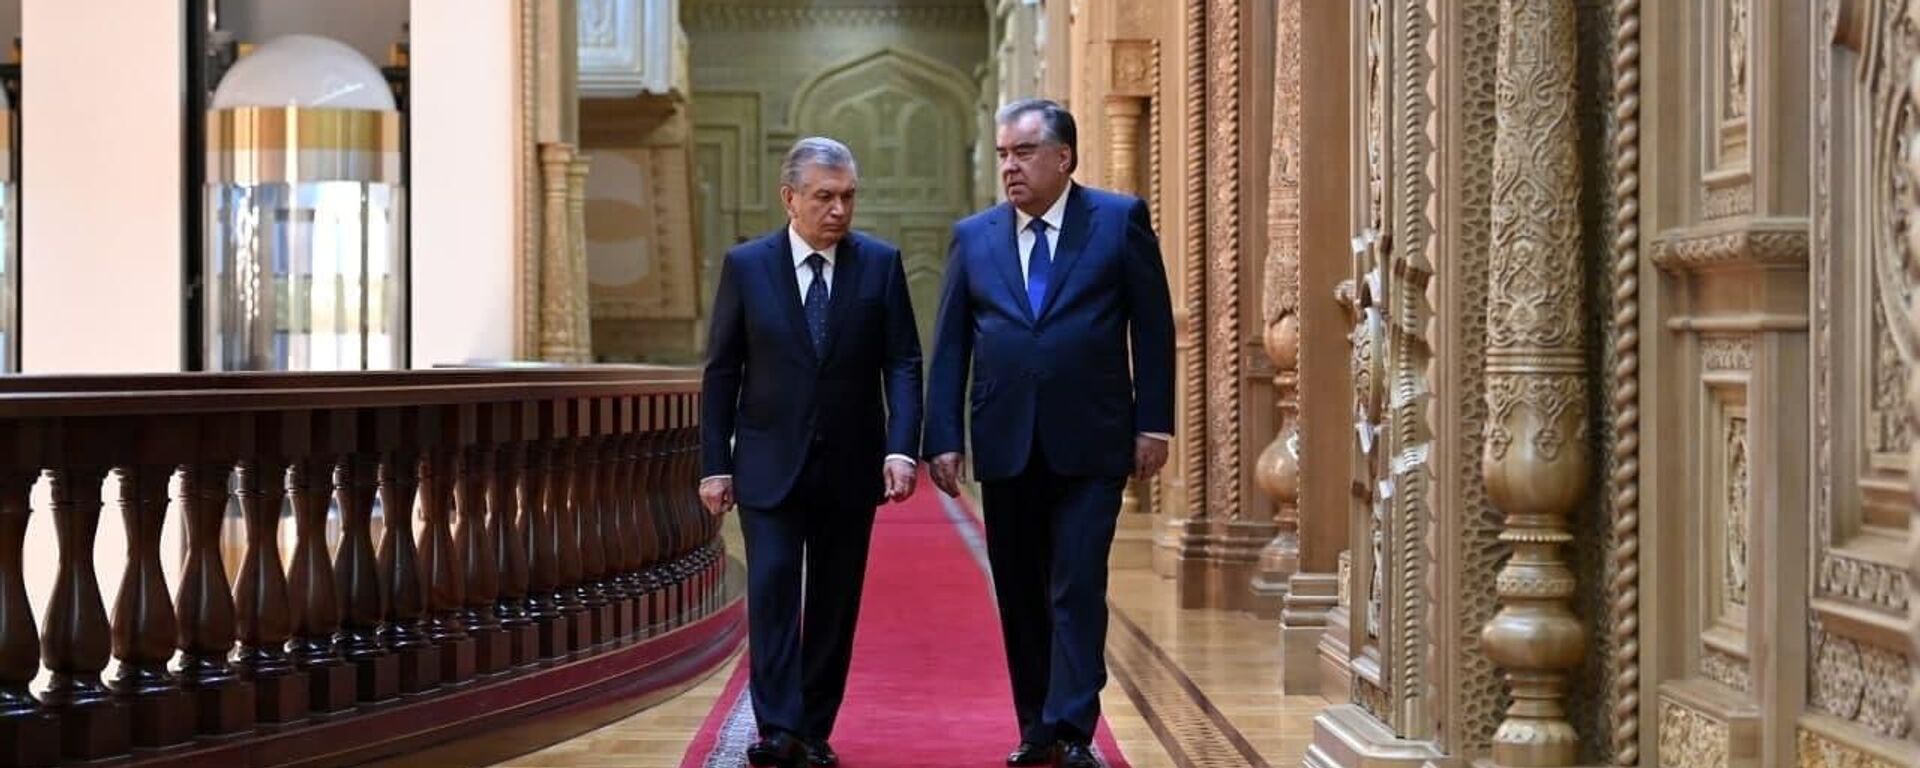 Президент Узбекистана Шавкат Мирзиеев и президент Таджикистана Эмомали Рахмон - Sputnik Таджикистан, 1920, 17.09.2021